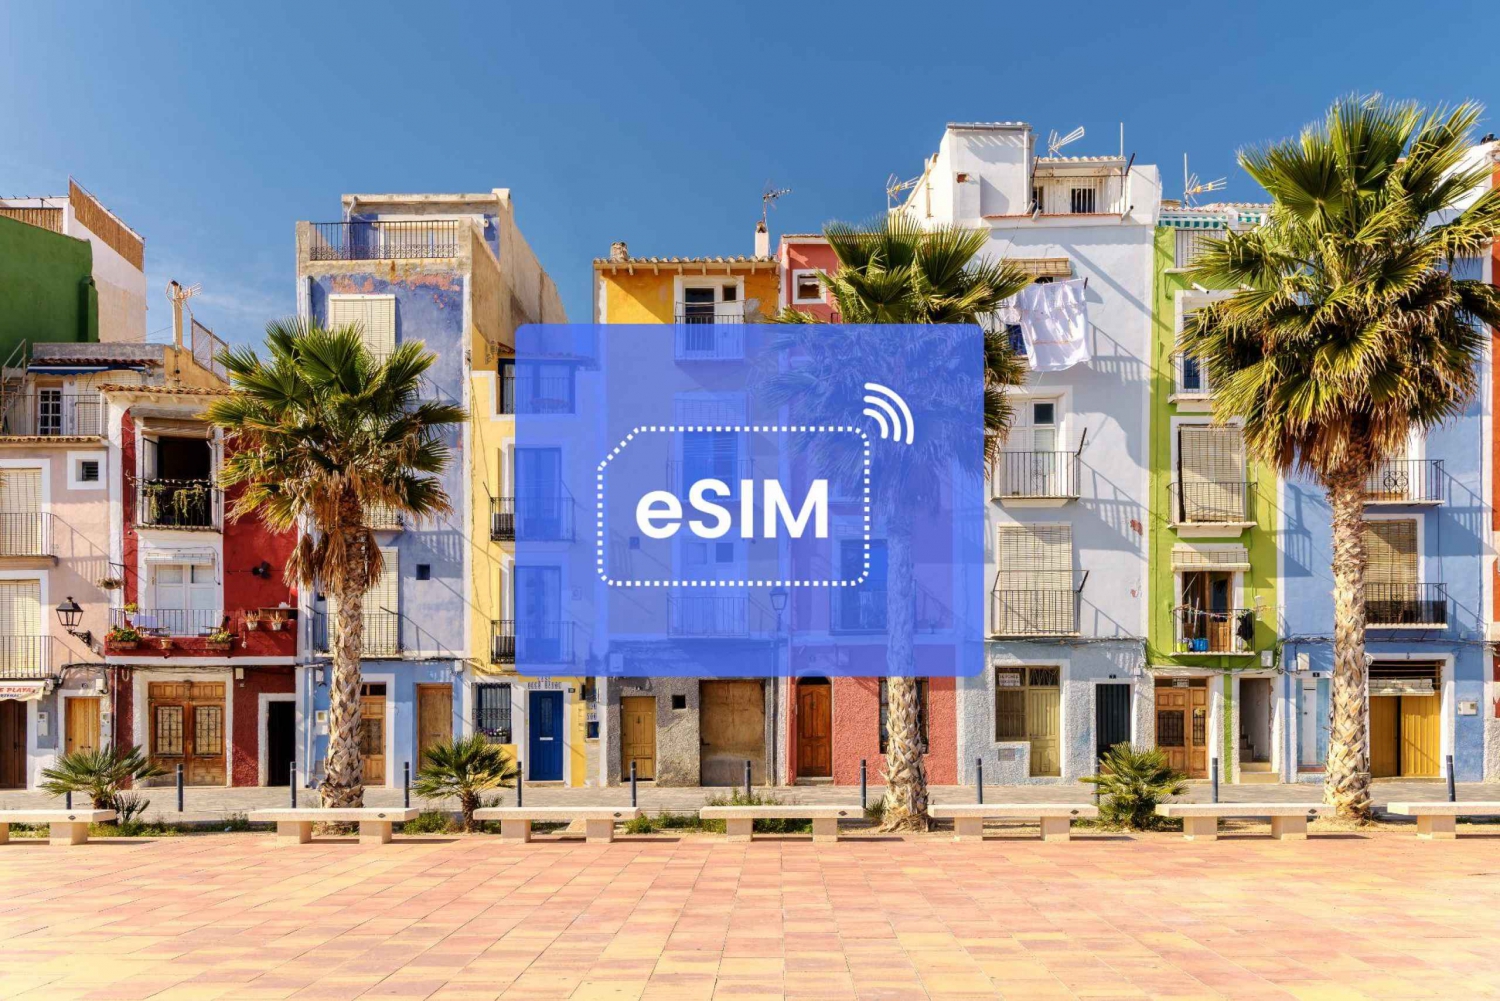 Alicante: Spain/ Europe eSIM Roaming Mobile Data Plan